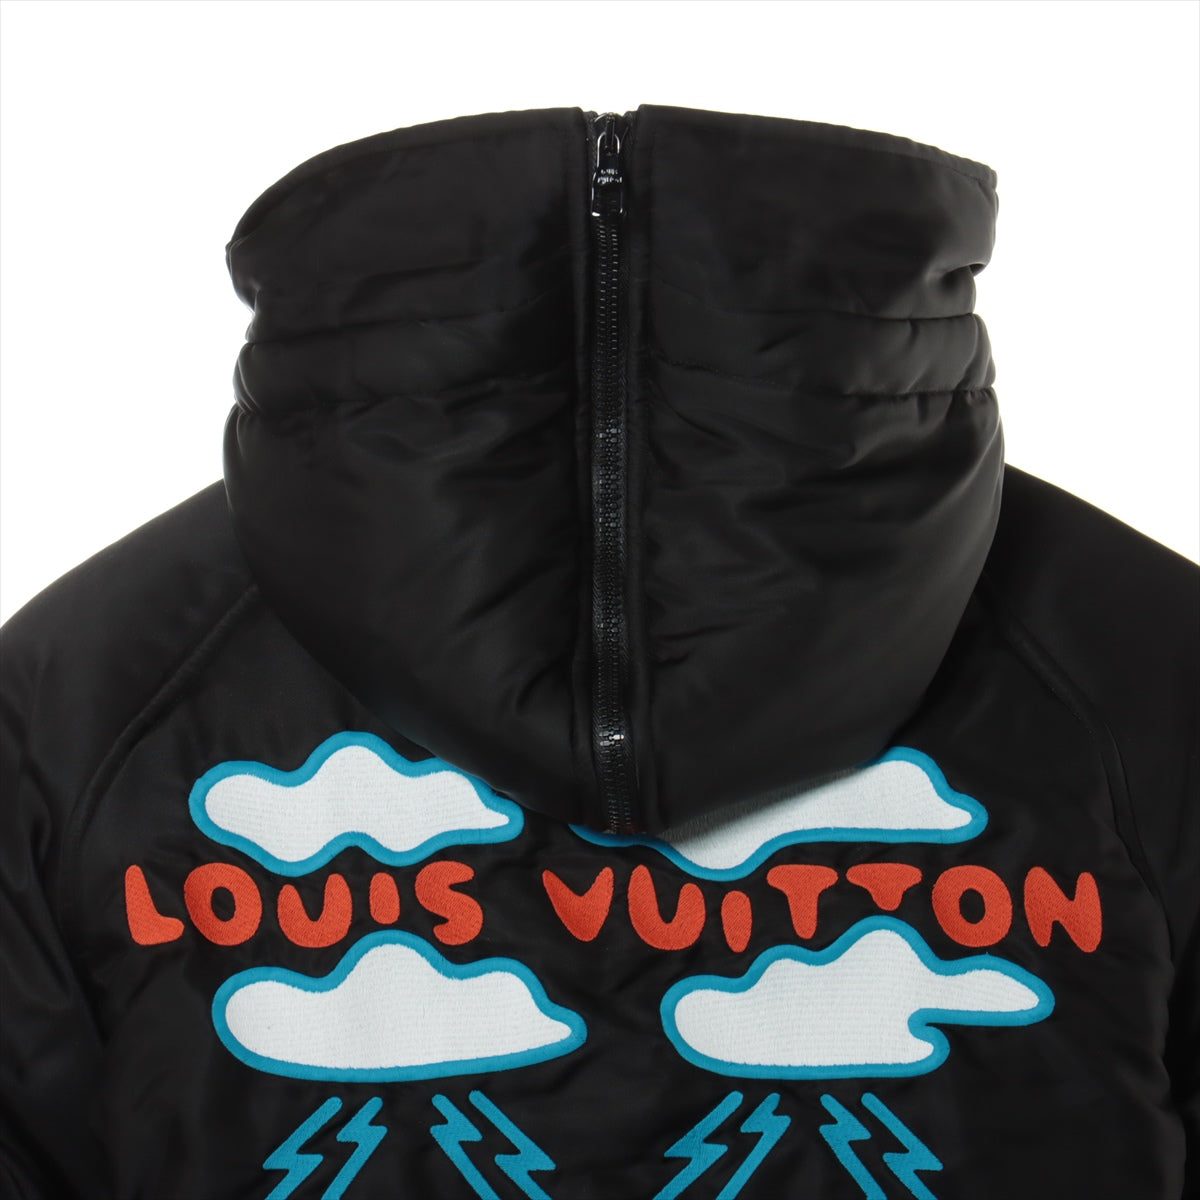 Louis Vuitton 20AW Nylon Jacket 46 Men's Black  Removable fur HJB02ERSL